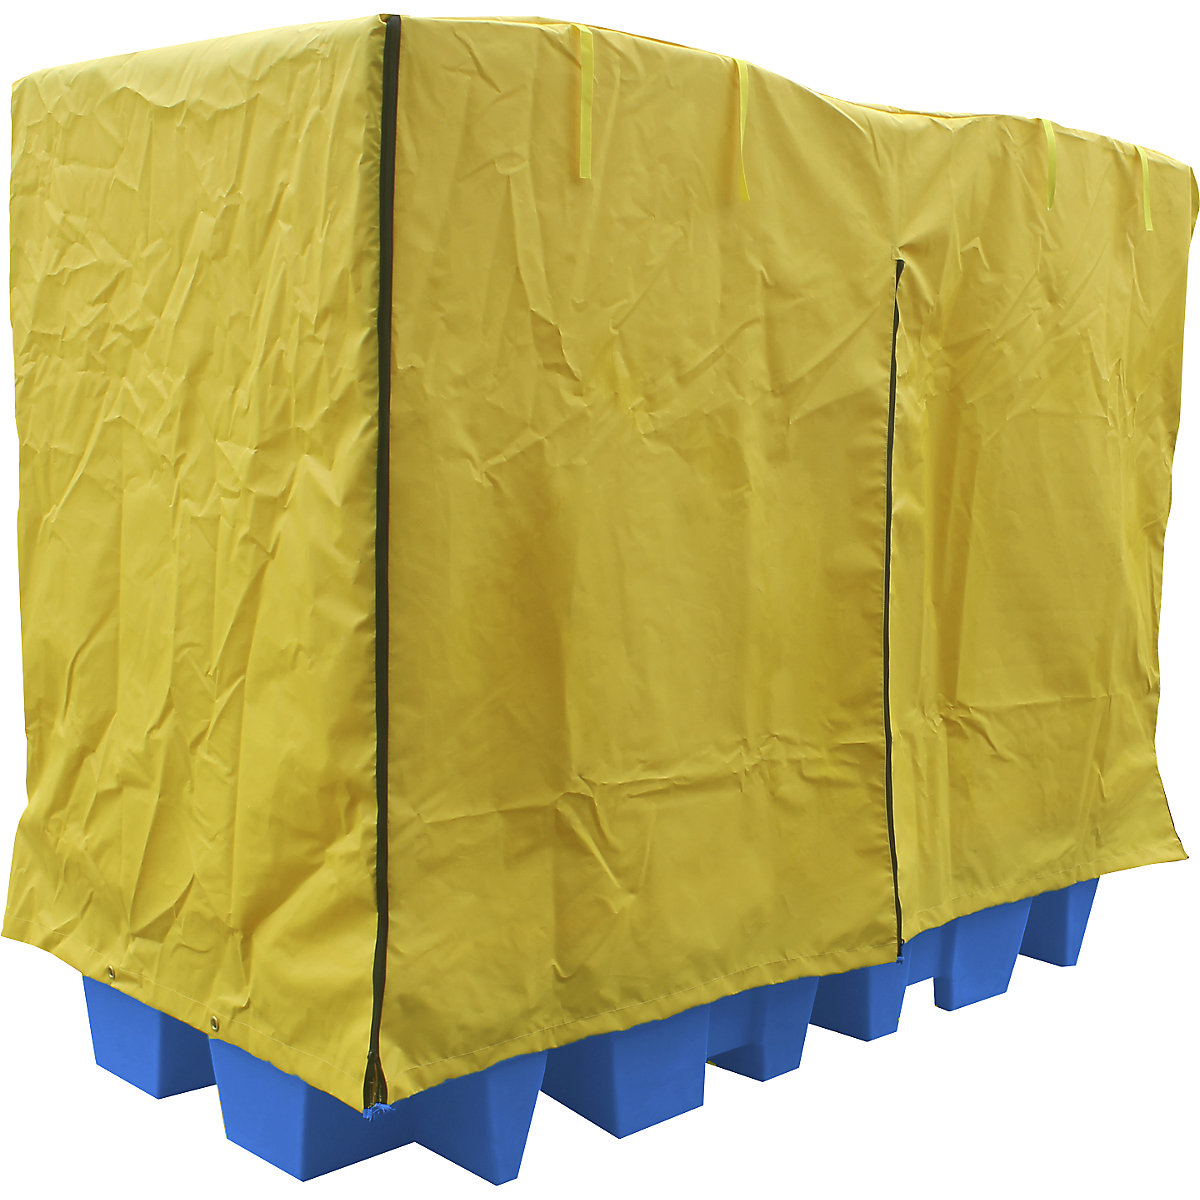 PE sump tray with tarpaulin enclosure